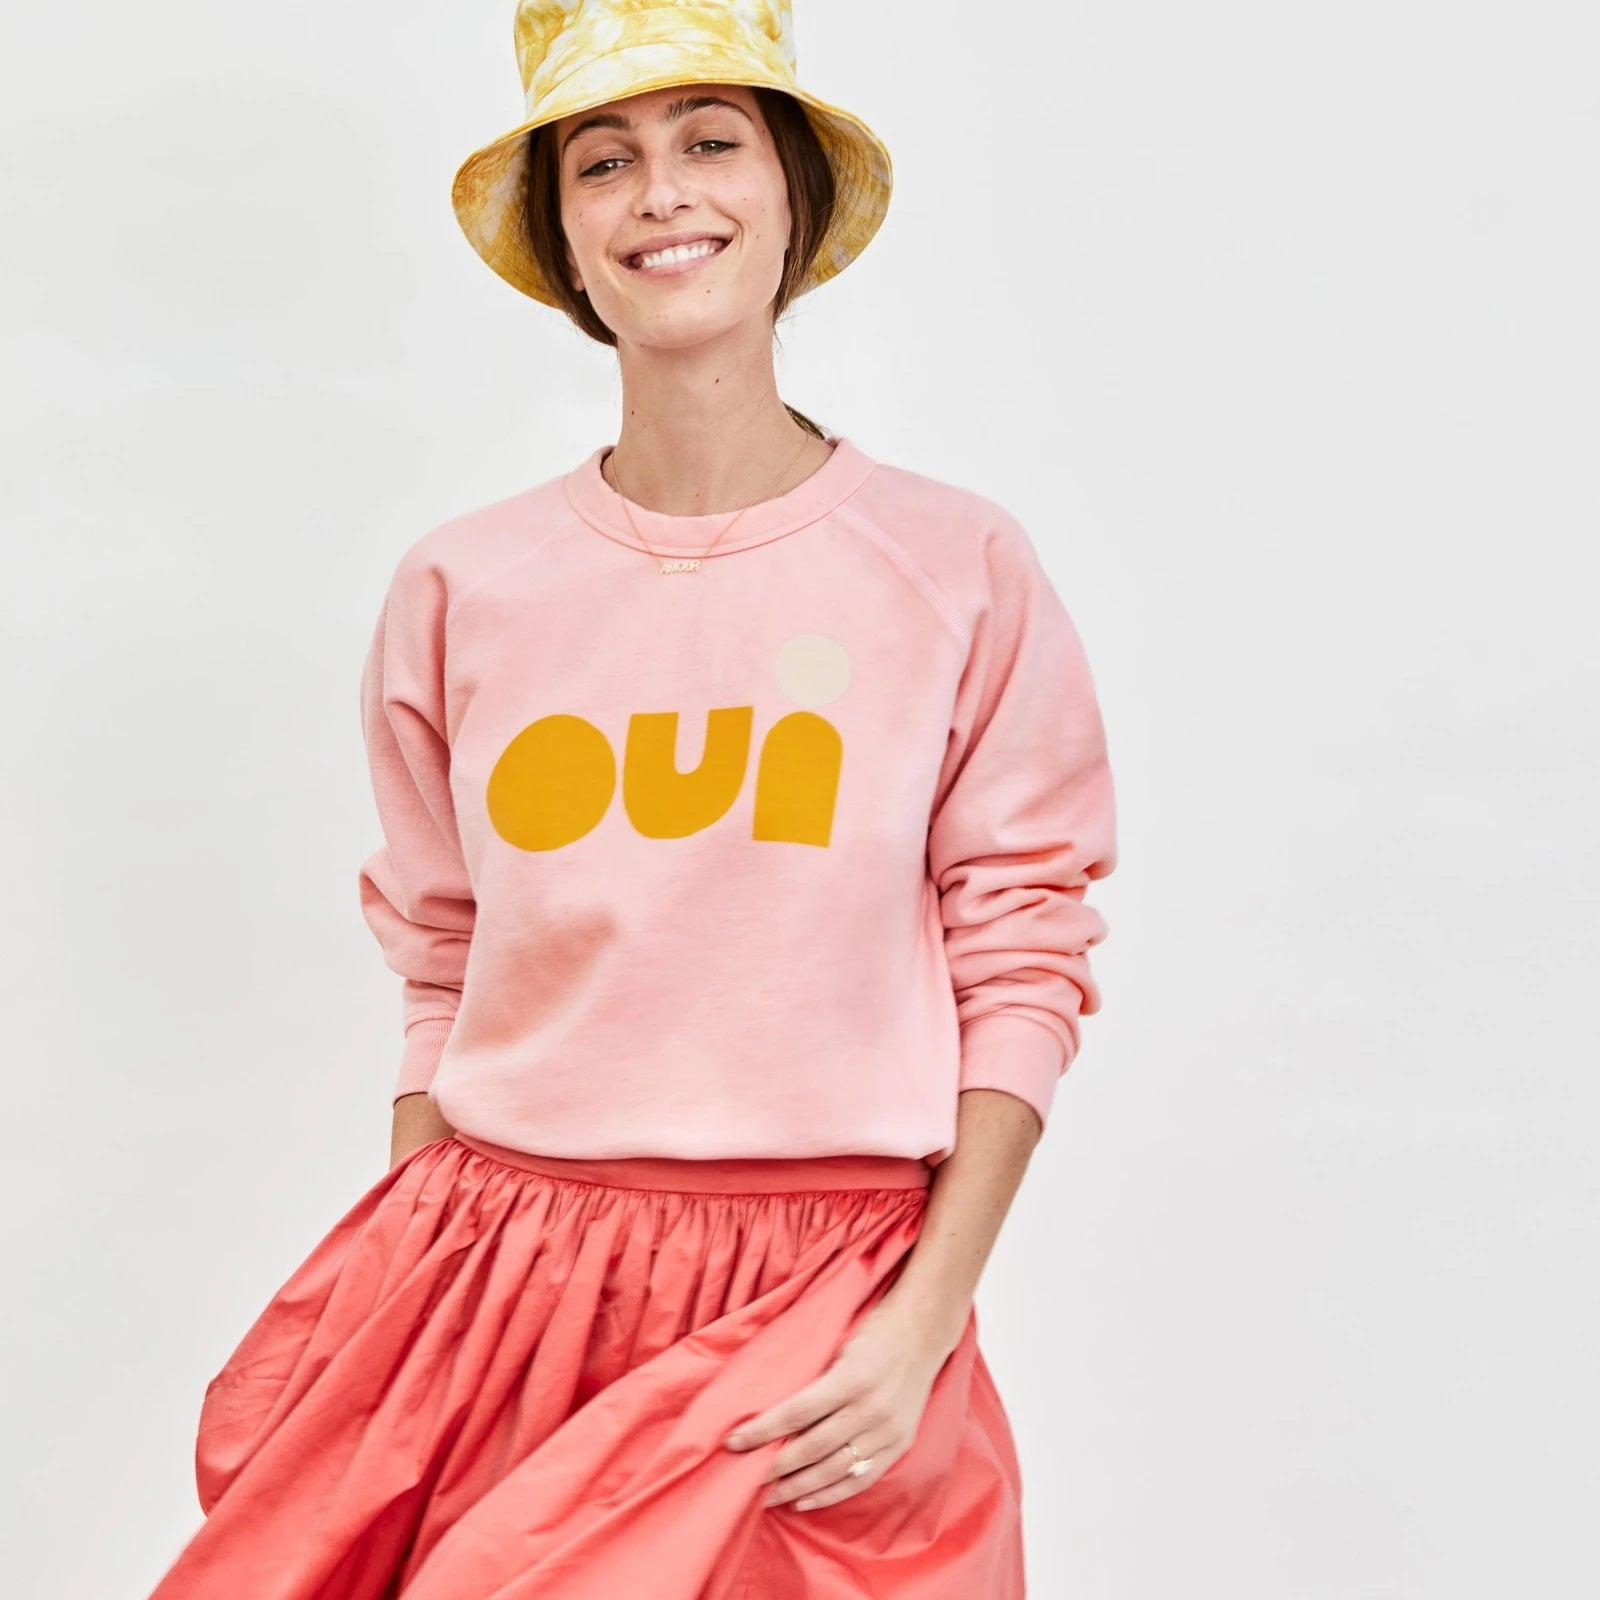 Clare V. - Sweatshirt in Rose w/ Marigold & Cream Cut-Out Oui